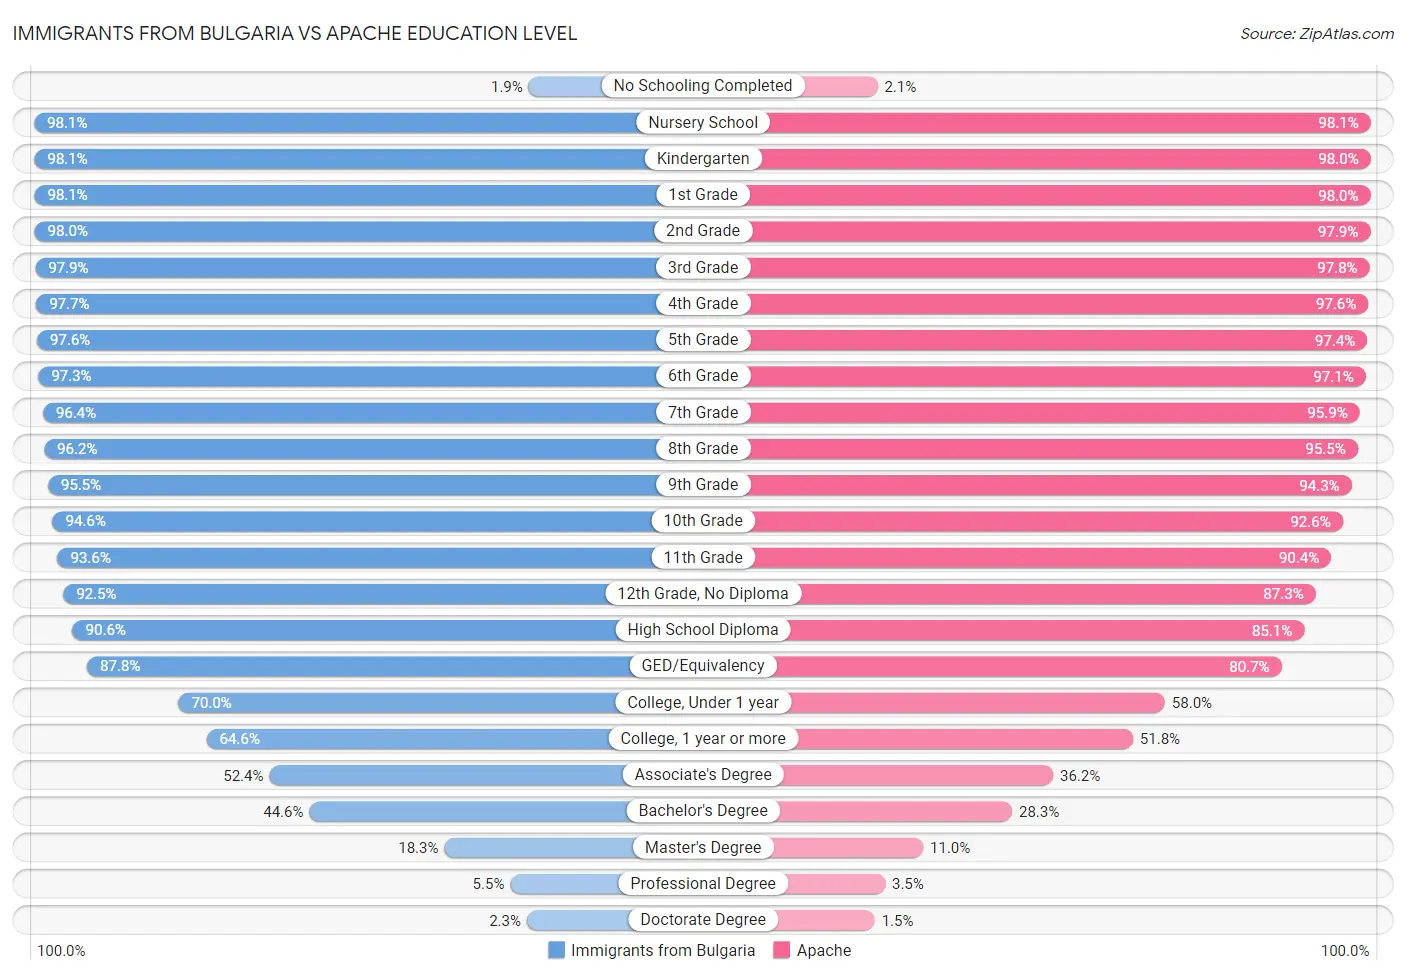 Immigrants from Bulgaria vs Apache Education Level